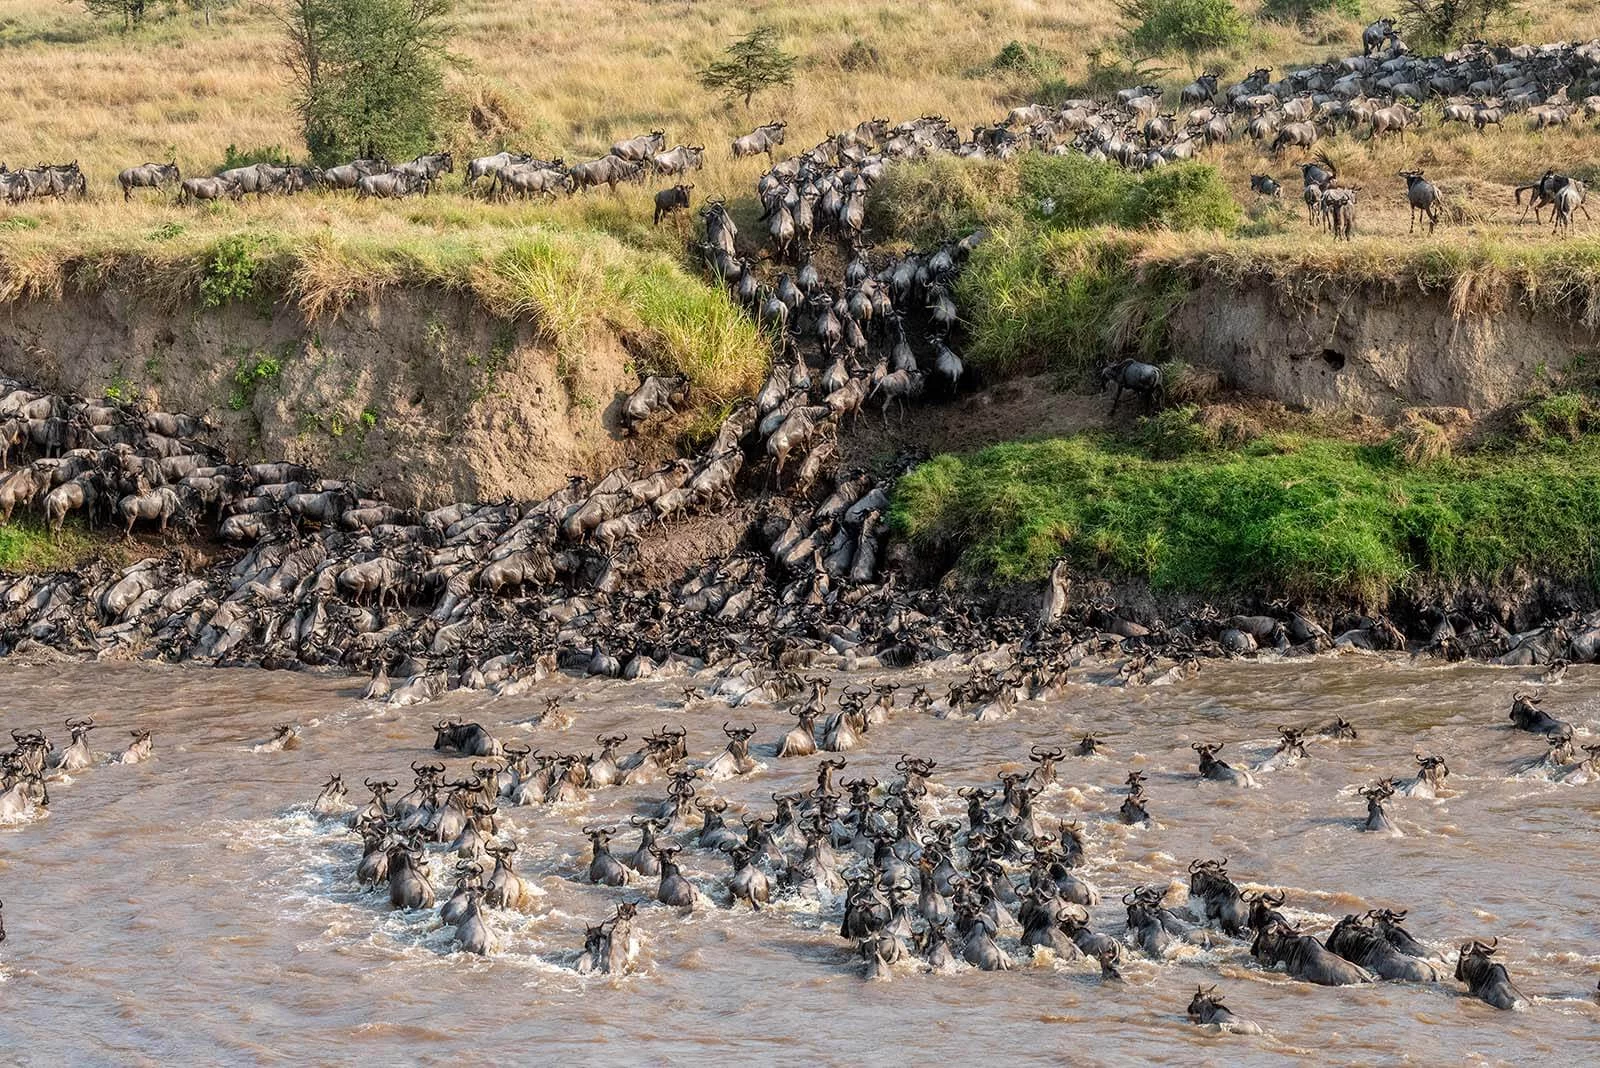 Viewing the Masai Mara Migration - Wildebeest wading through Mara River